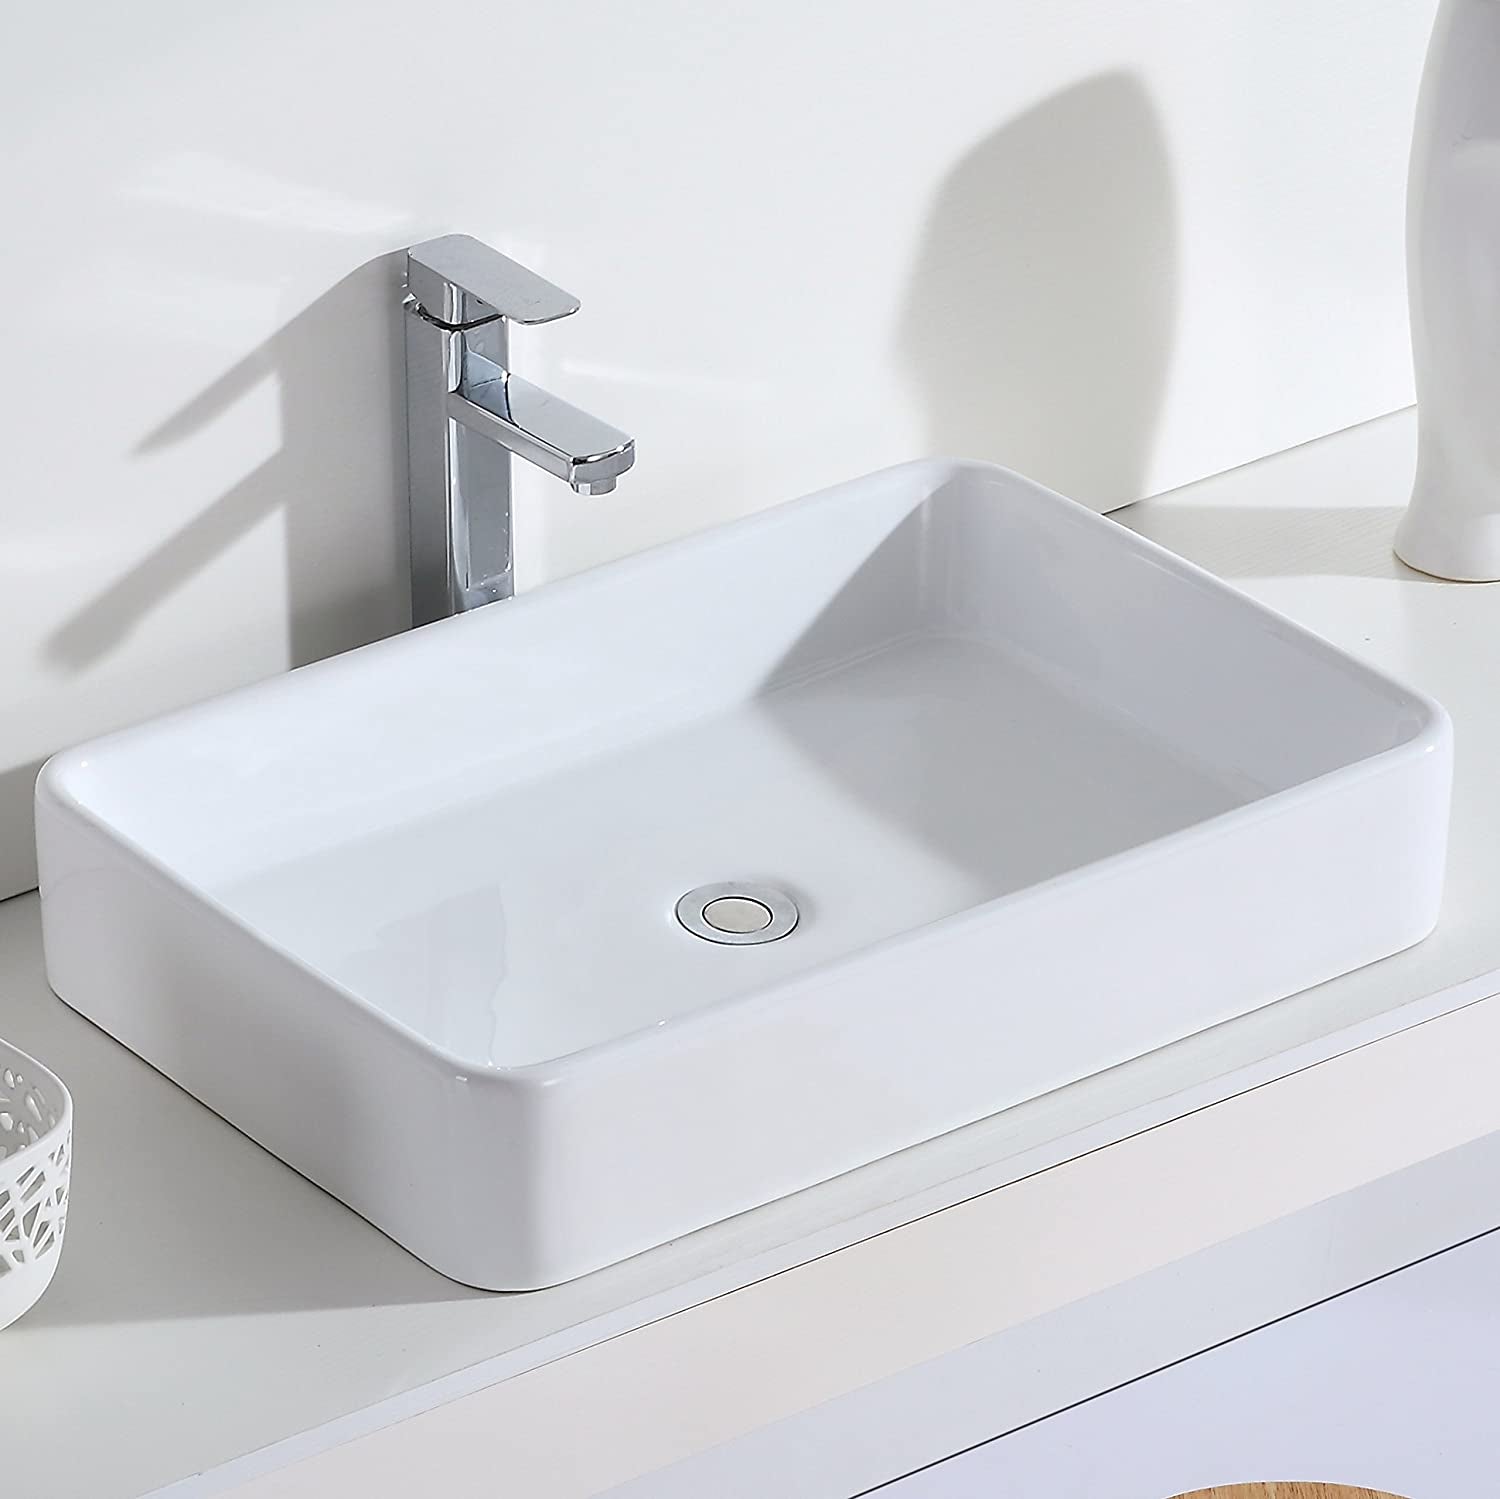 [Series Nevada Bathroom Sink, Gloss White Ceramic Countertop Wash Basin Square Bathroom Sink Countertop Mounted for Lavatory Vanity Cabinet